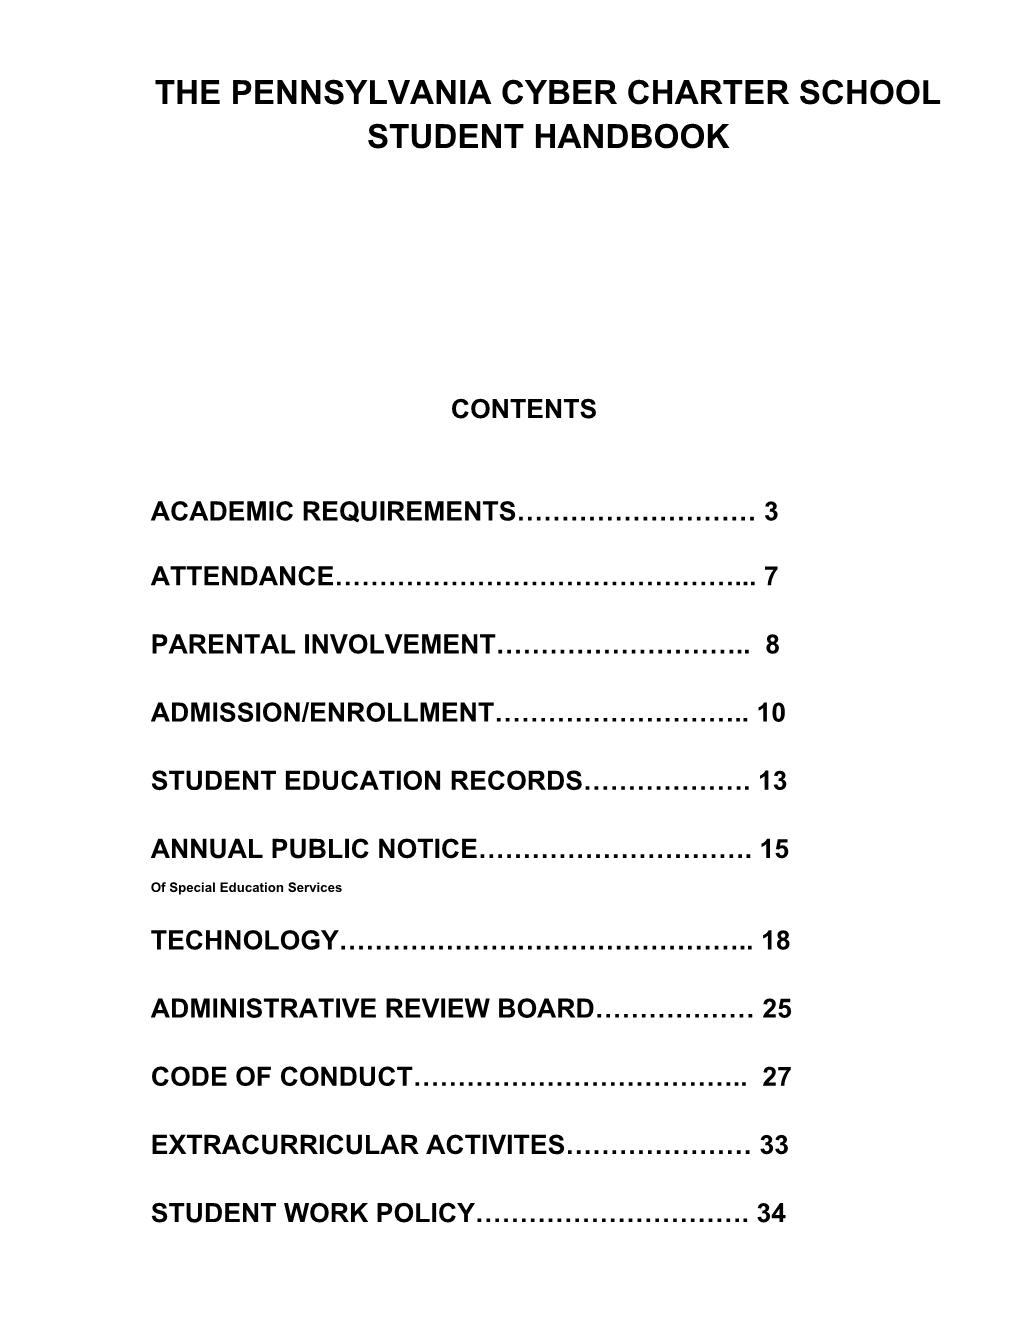 The Pennsylvania Cyber Charter School Student Handbook